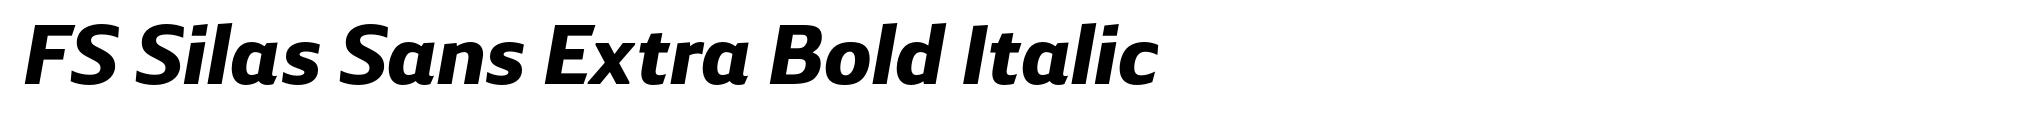 FS Silas Sans Extra Bold Italic image